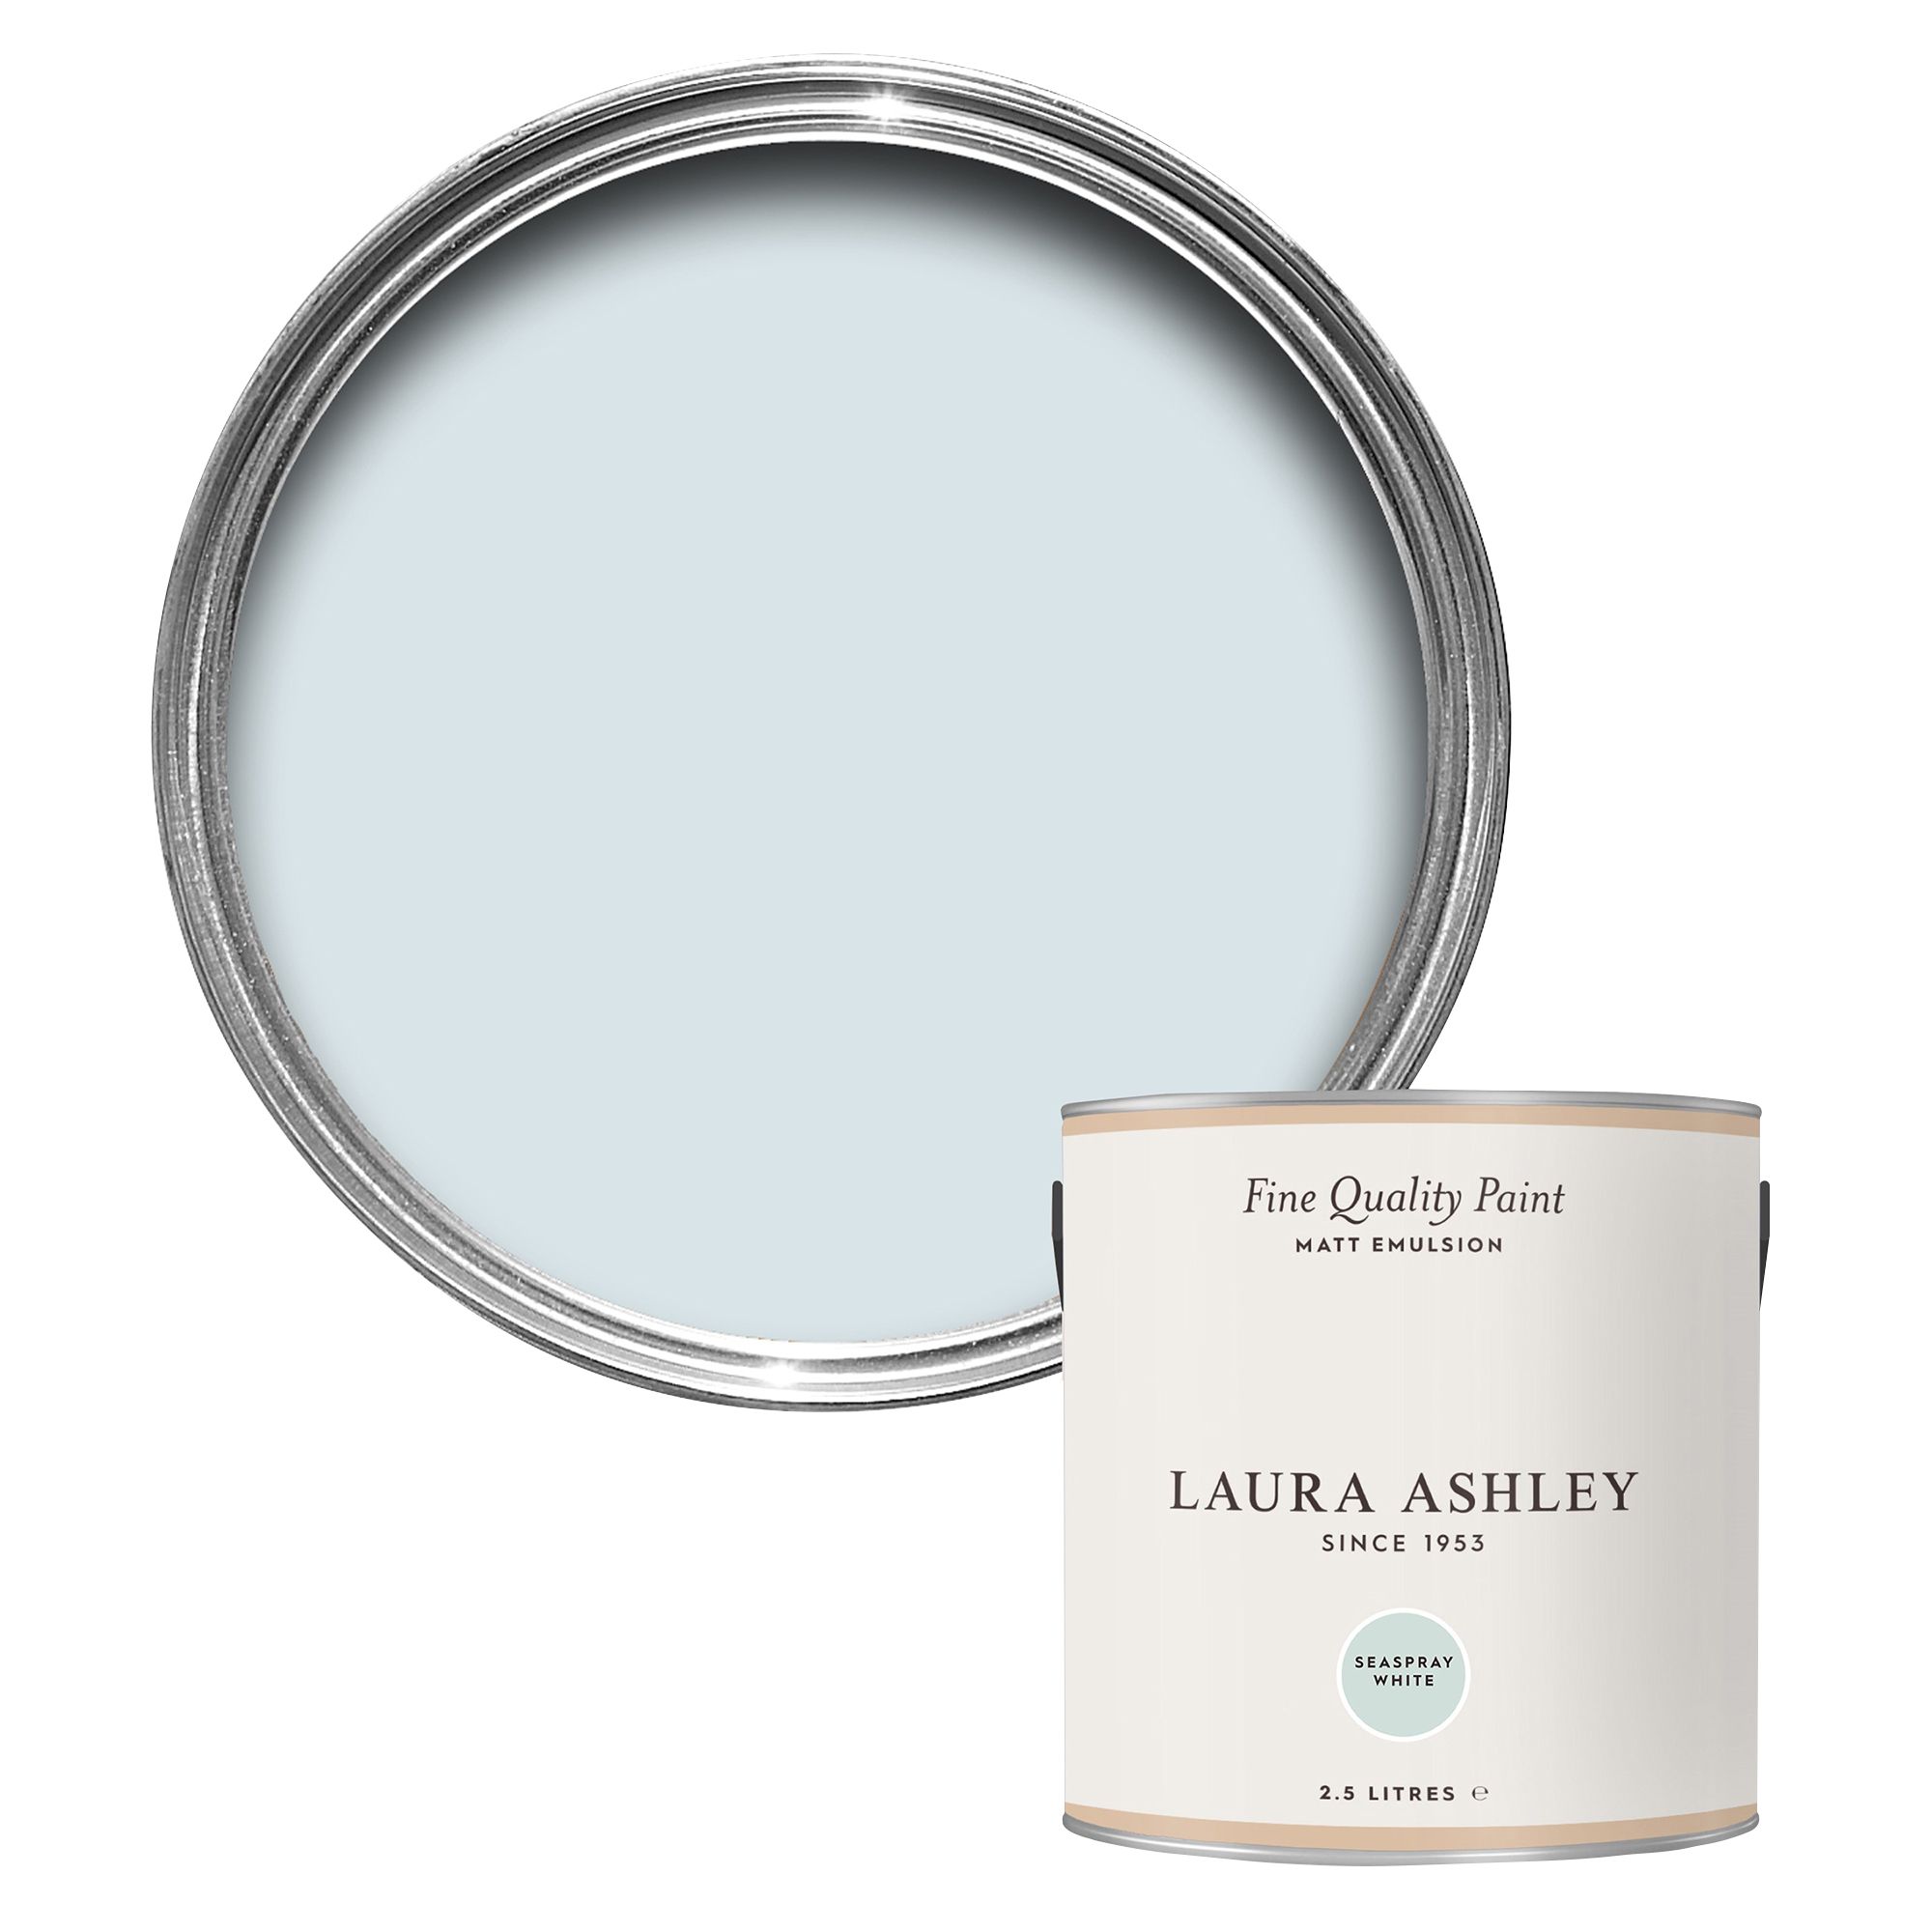 Laura Ashley Paint Chalk Blue